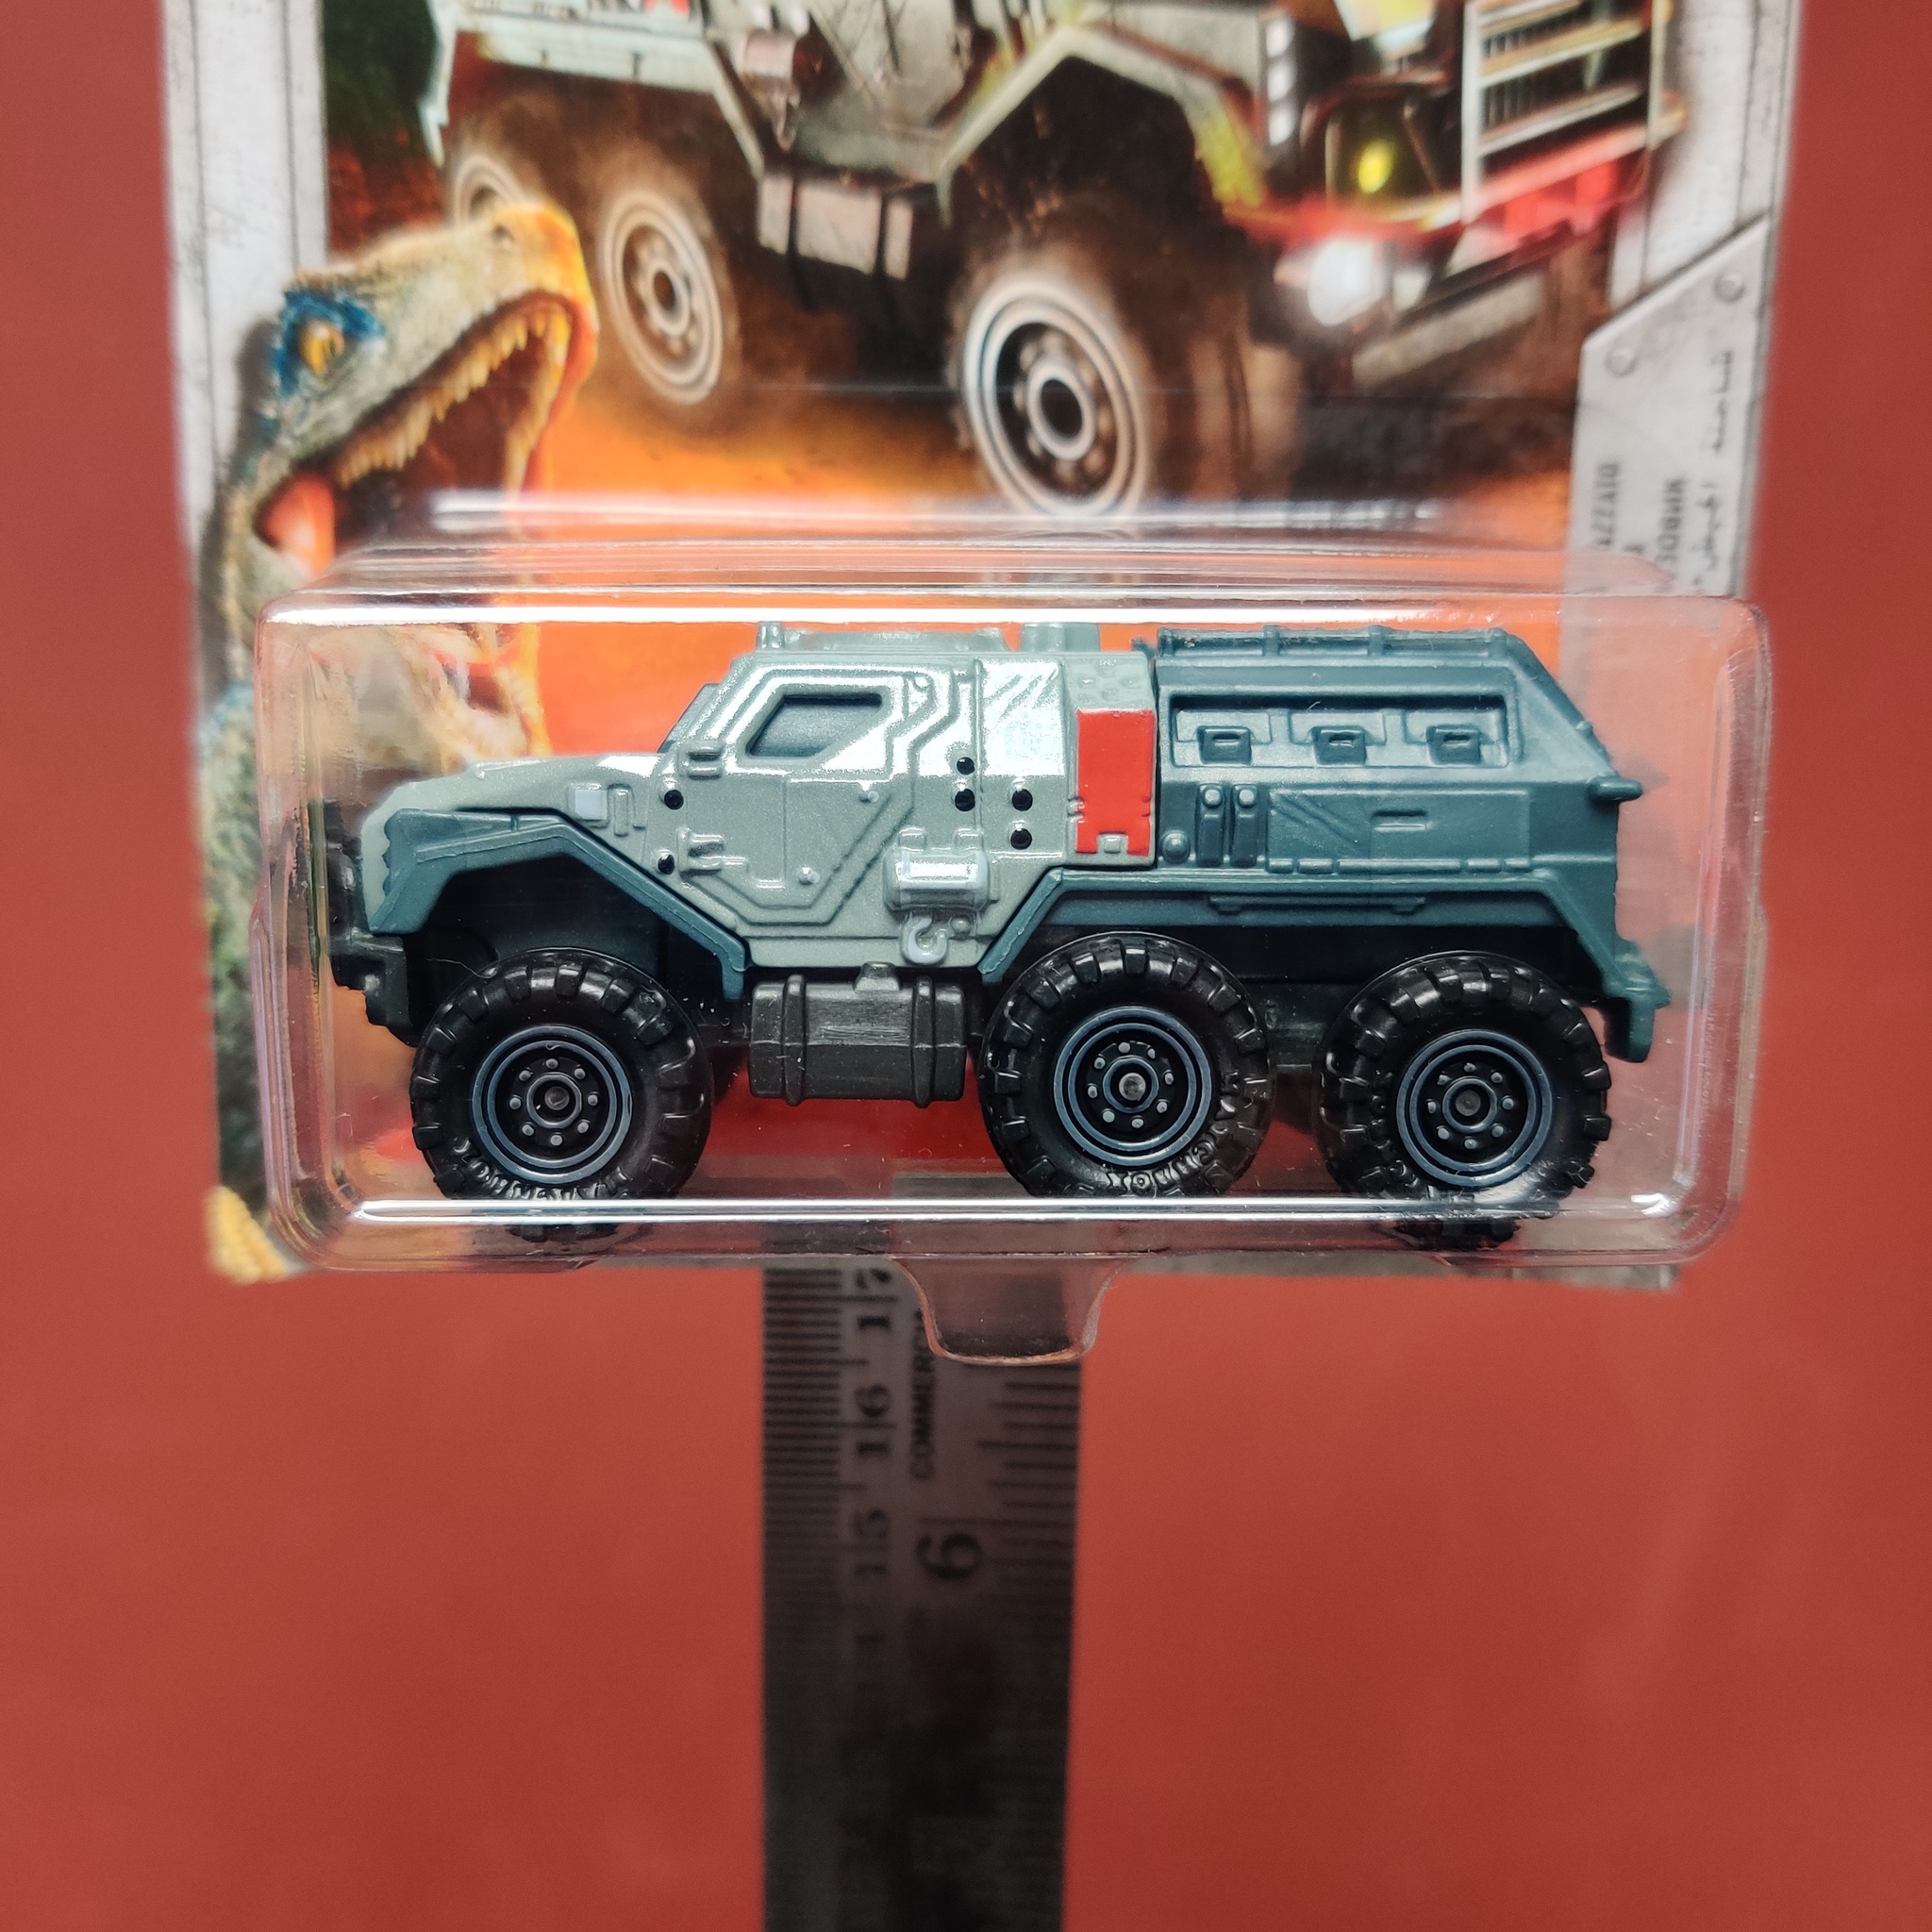 Skala 1/64 Matchbox: Armored Action Truck "Jurassic World"